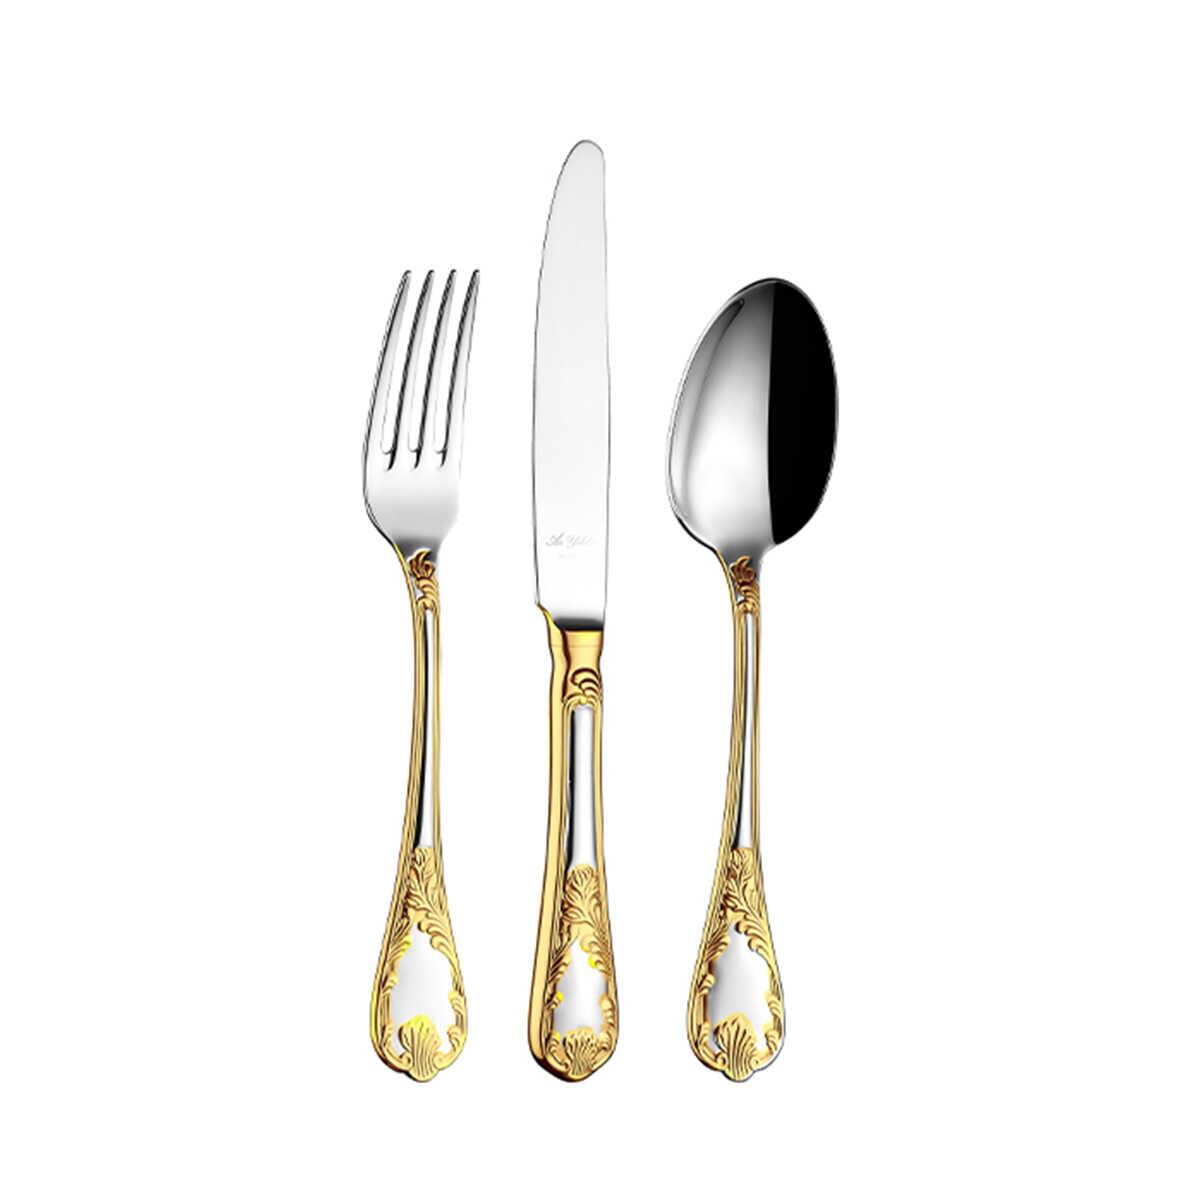 Aryıldız Pera Antique Series Plus Fork Spoon Knife 89 Pieces